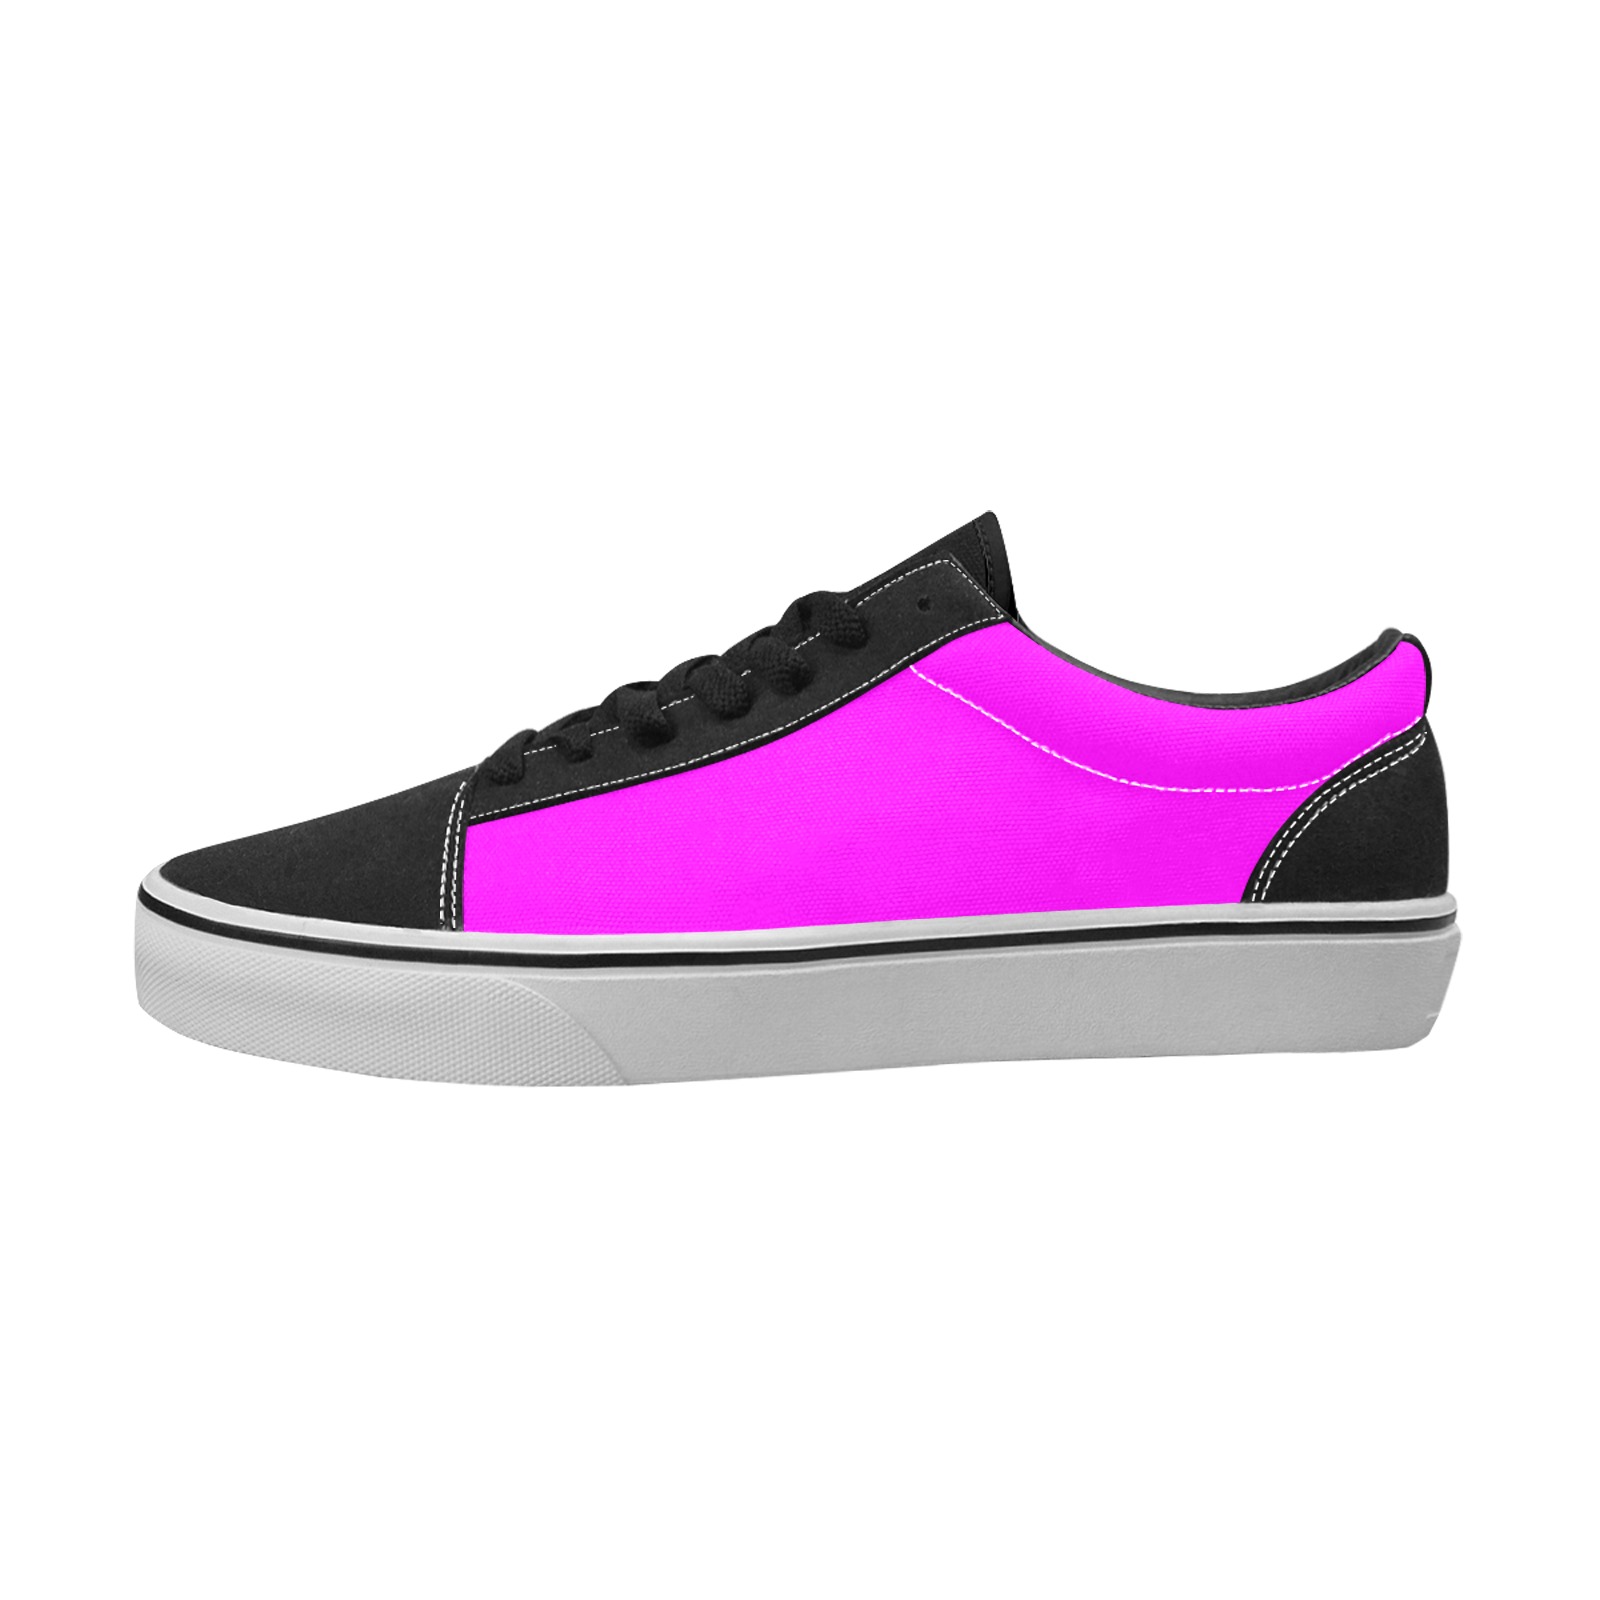 color fuchsia / magenta Men's Low Top Skateboarding Shoes (Model E001-2)